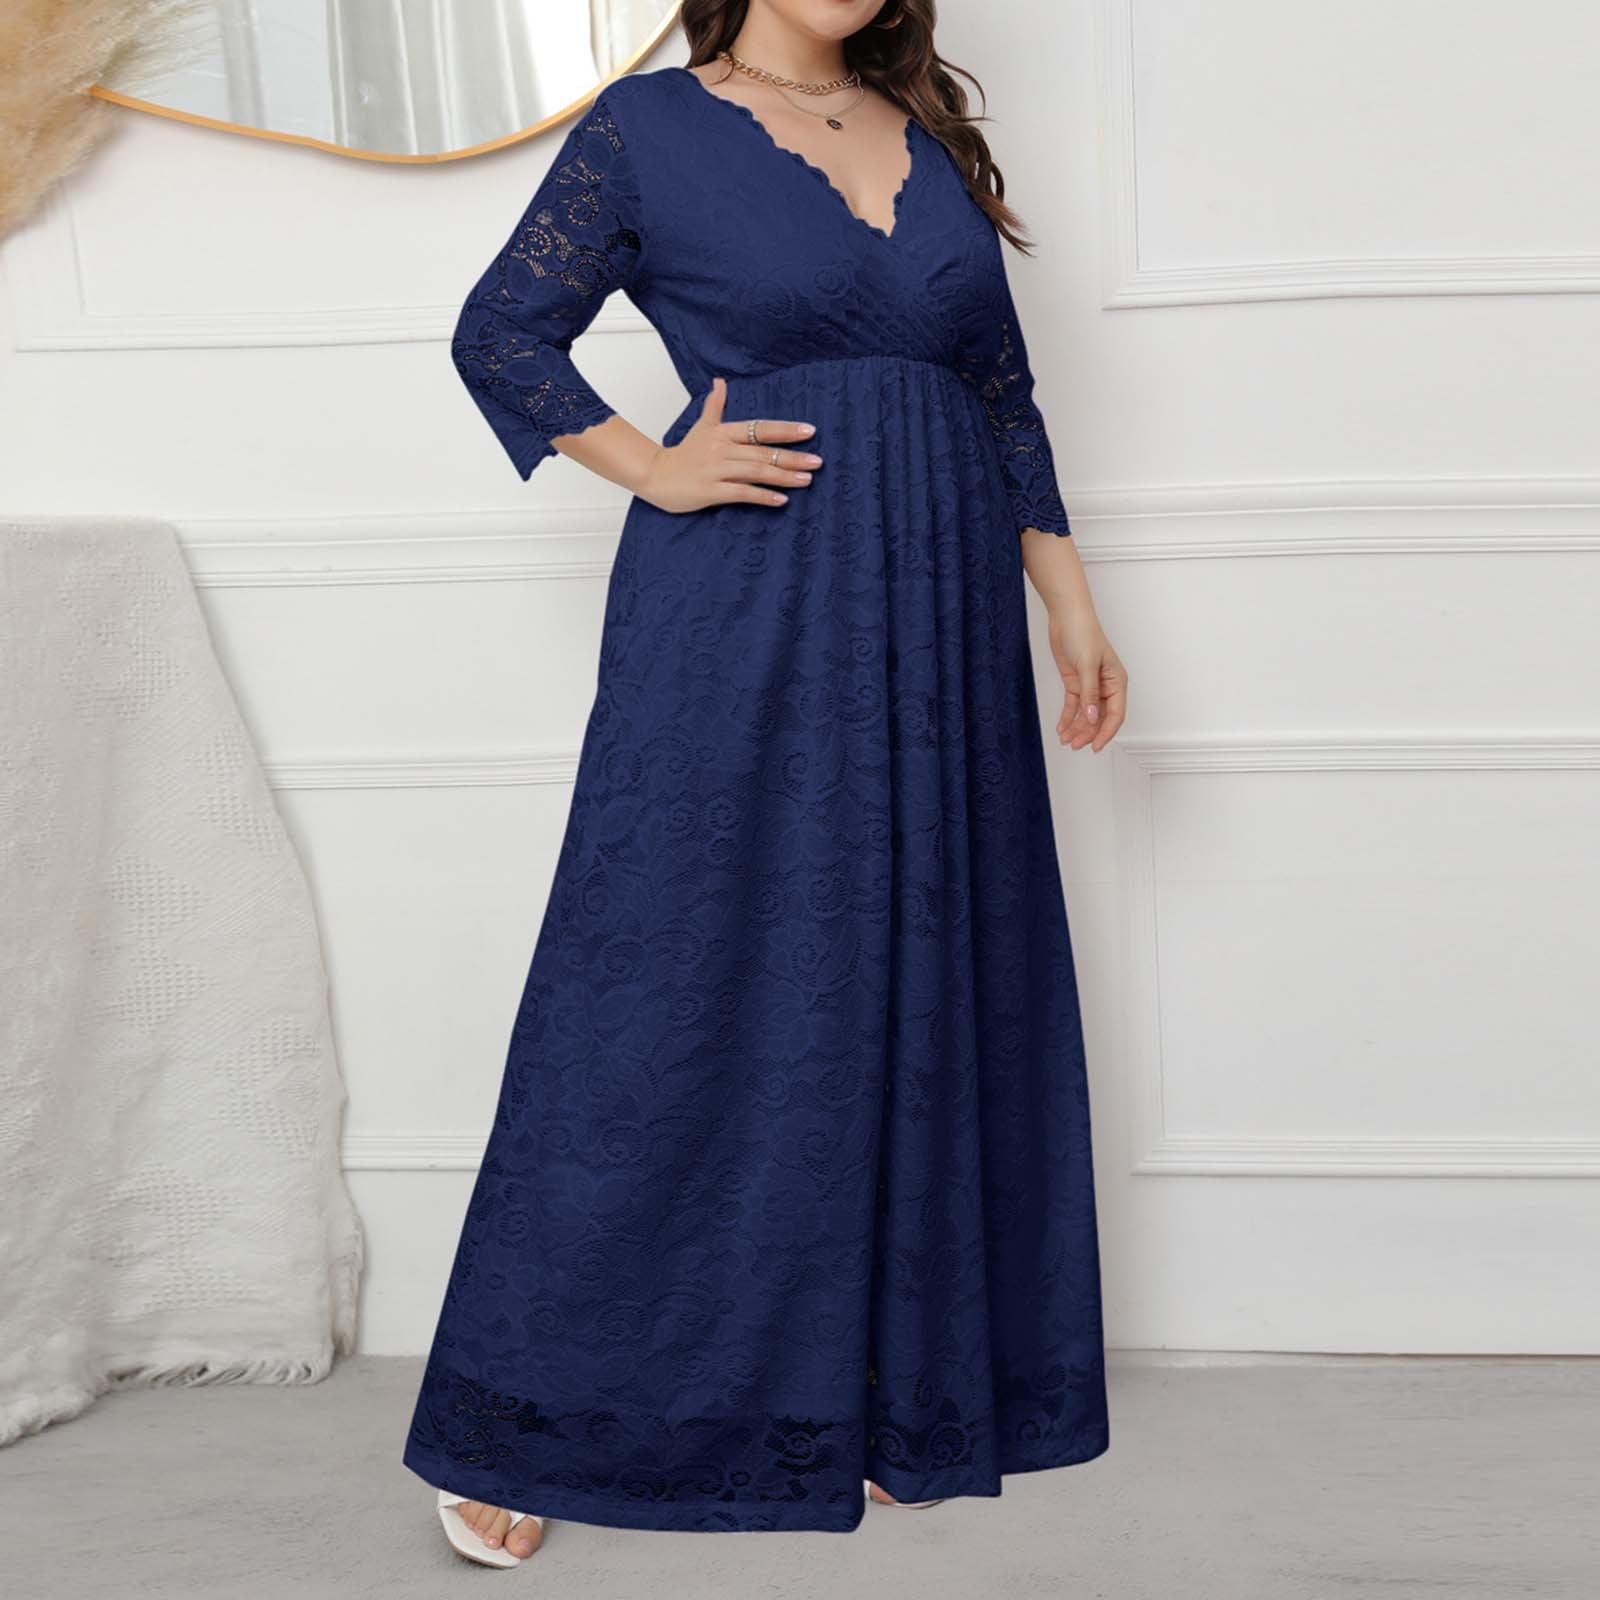 Buy 56/4XL Size White Plus Size Anarkali Dresses Online for Women in USA